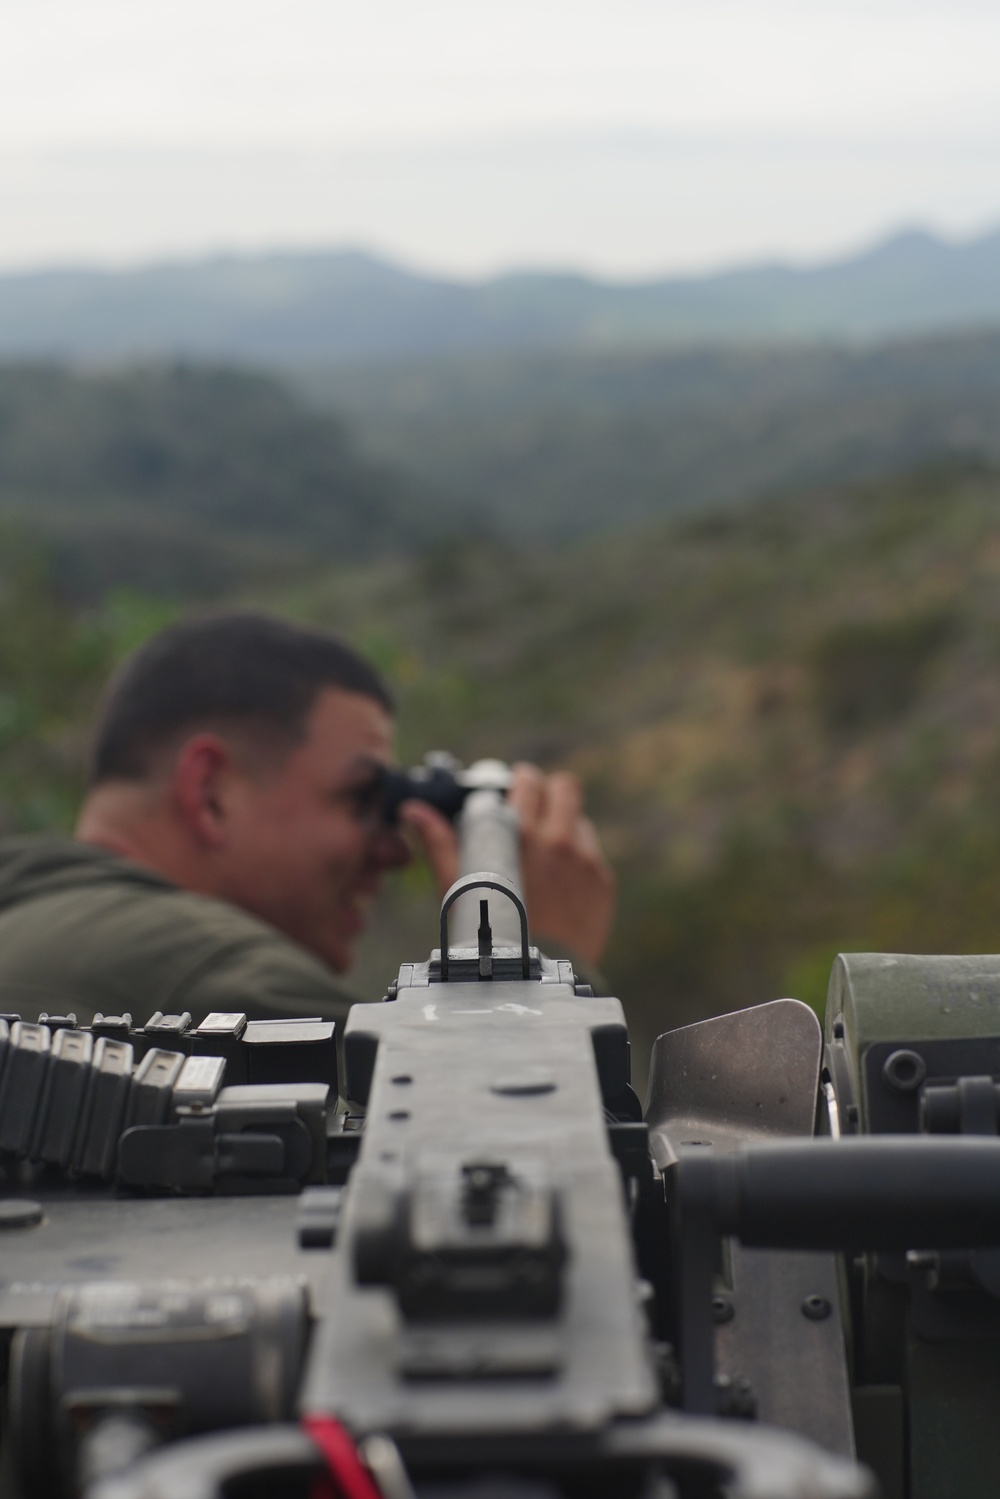 Iron Fist 2022: 3rd Assault Amphibian Battalion Marines conduct battle sight zero range